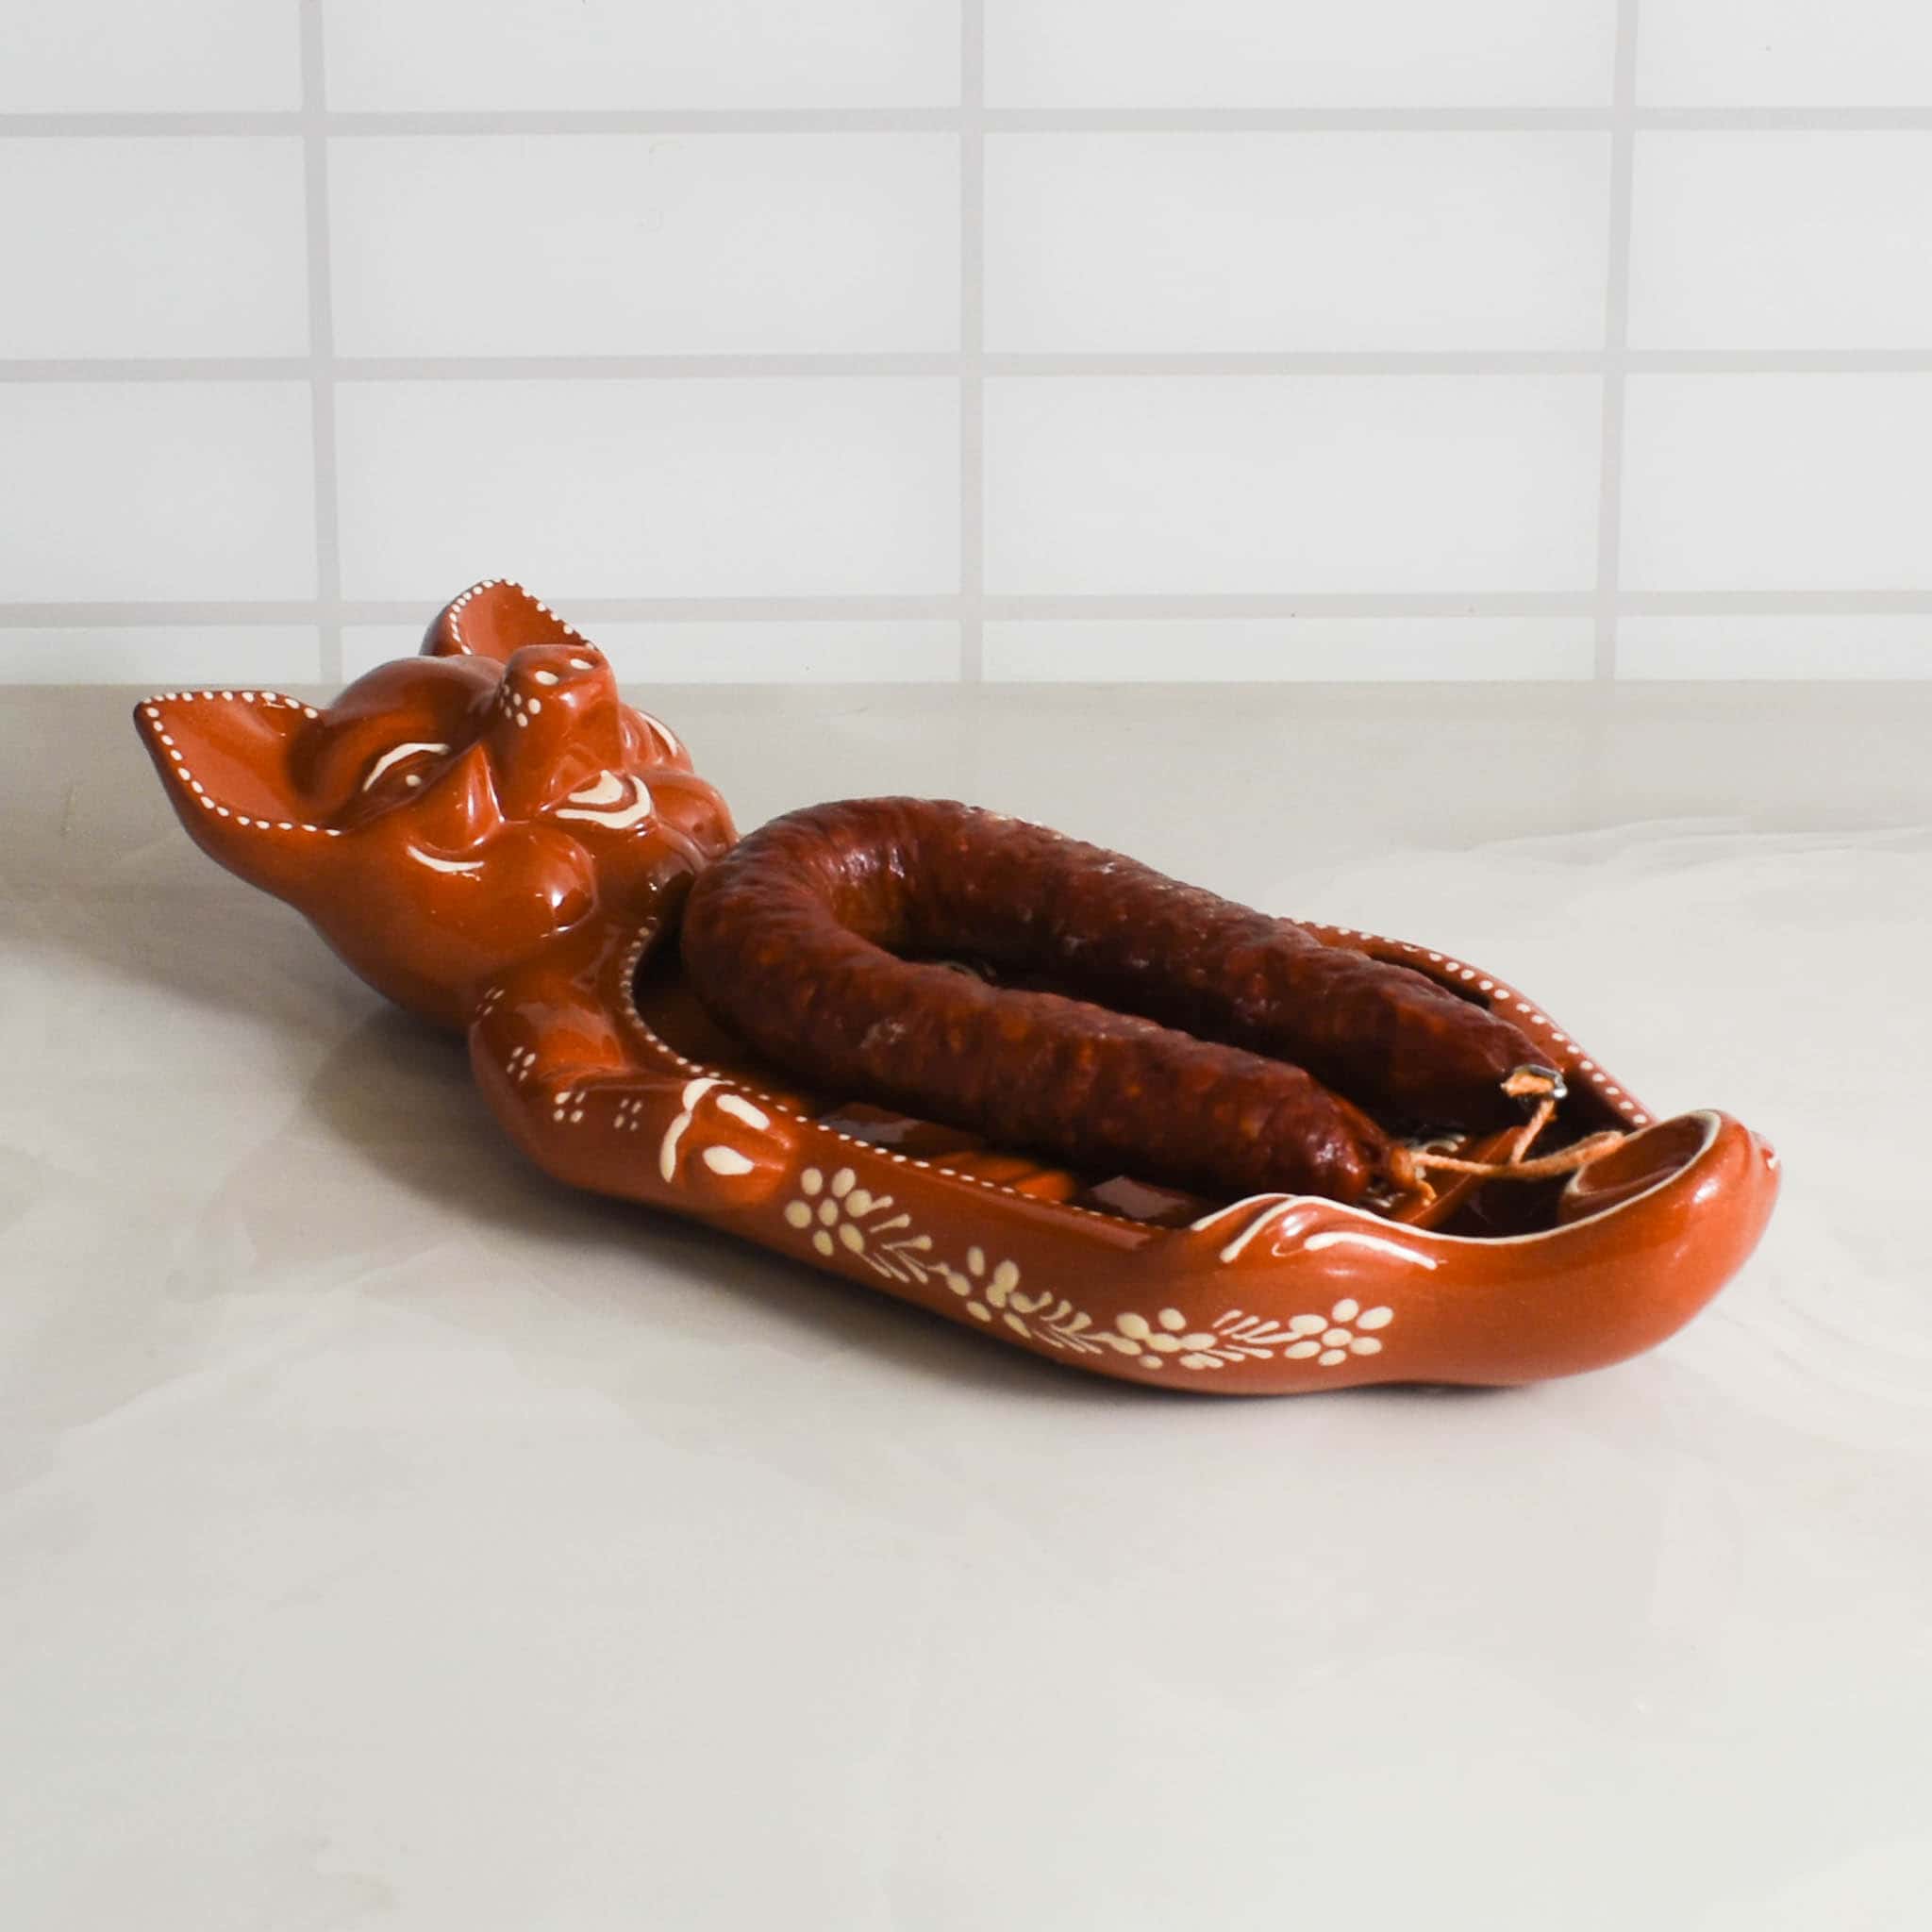 Terracotta Chorizo Pig Serving Dish